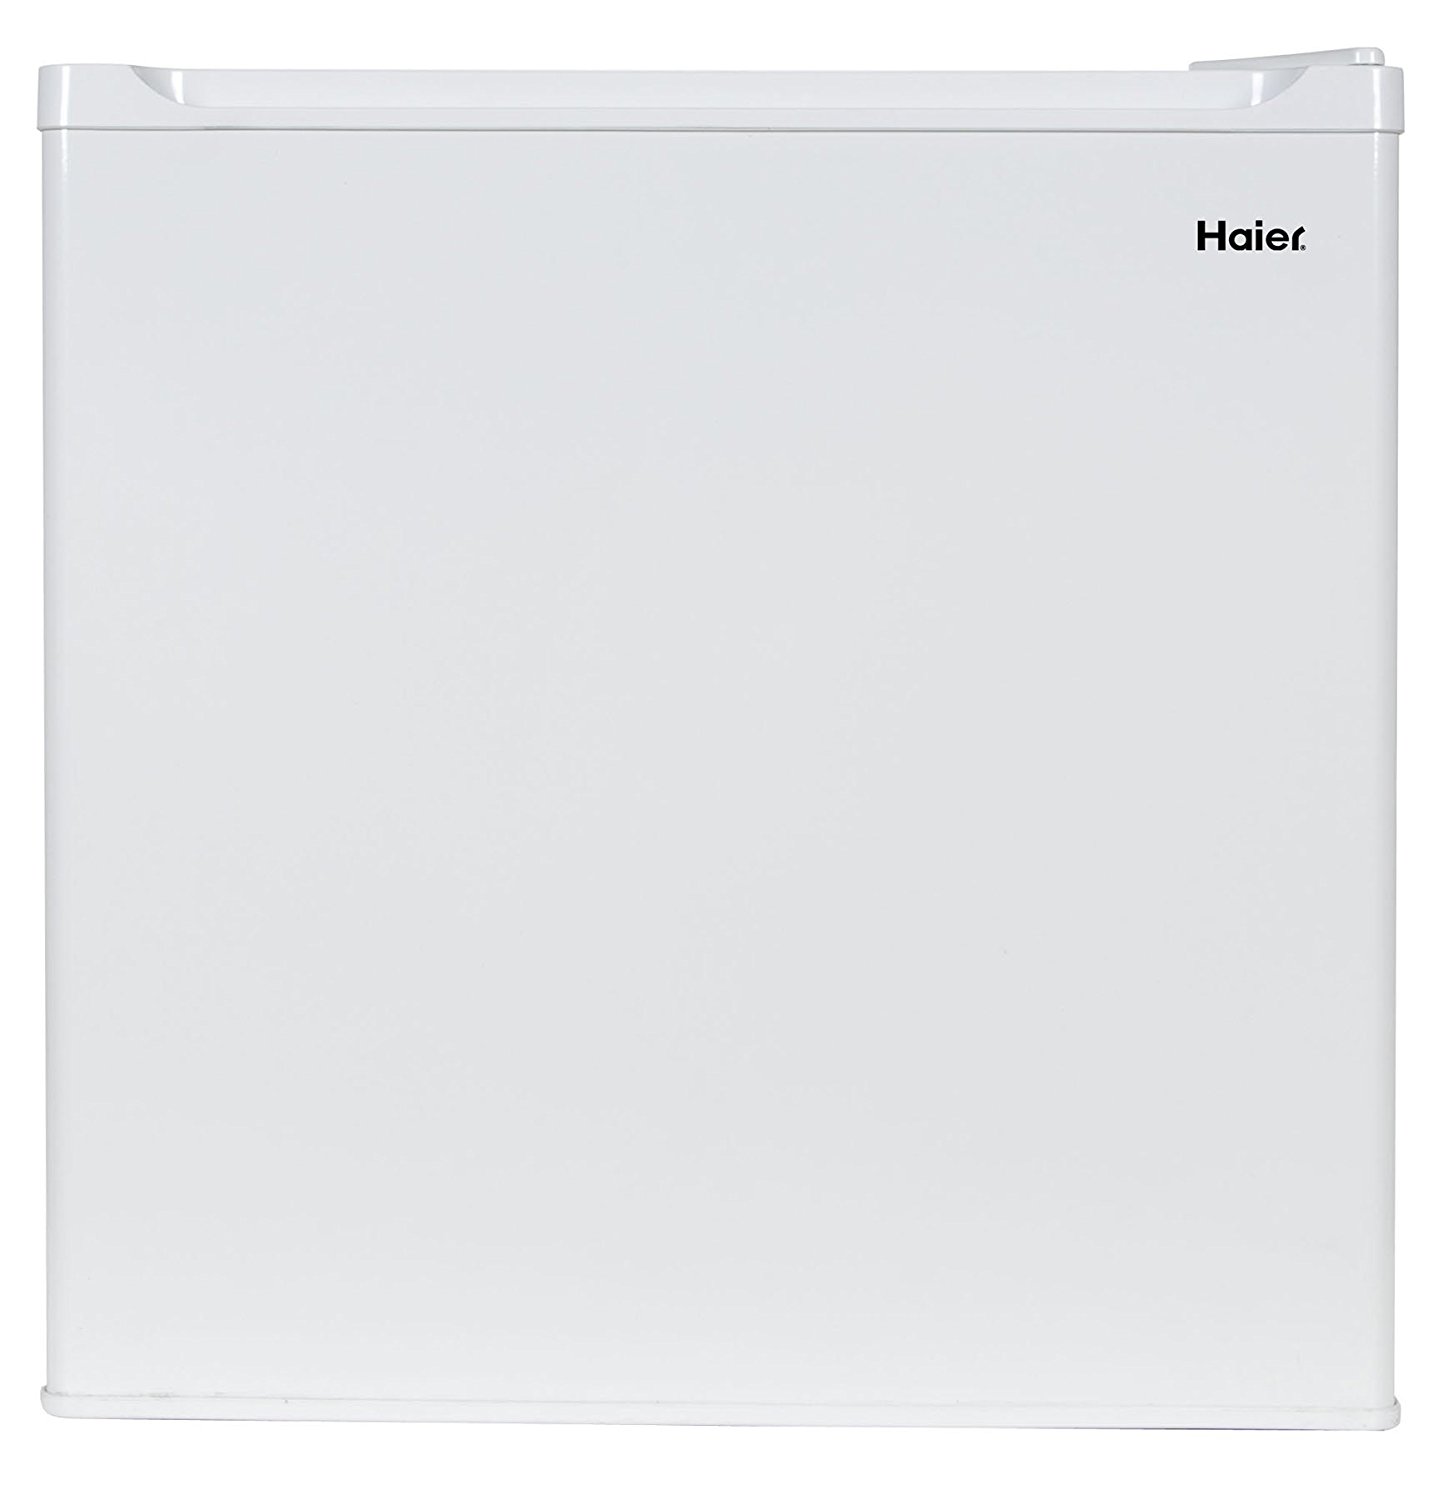 Haier HC17SF15RW 1.7 Cubic Feet Refrigerator/Freezer, Energy Star Qualified, White